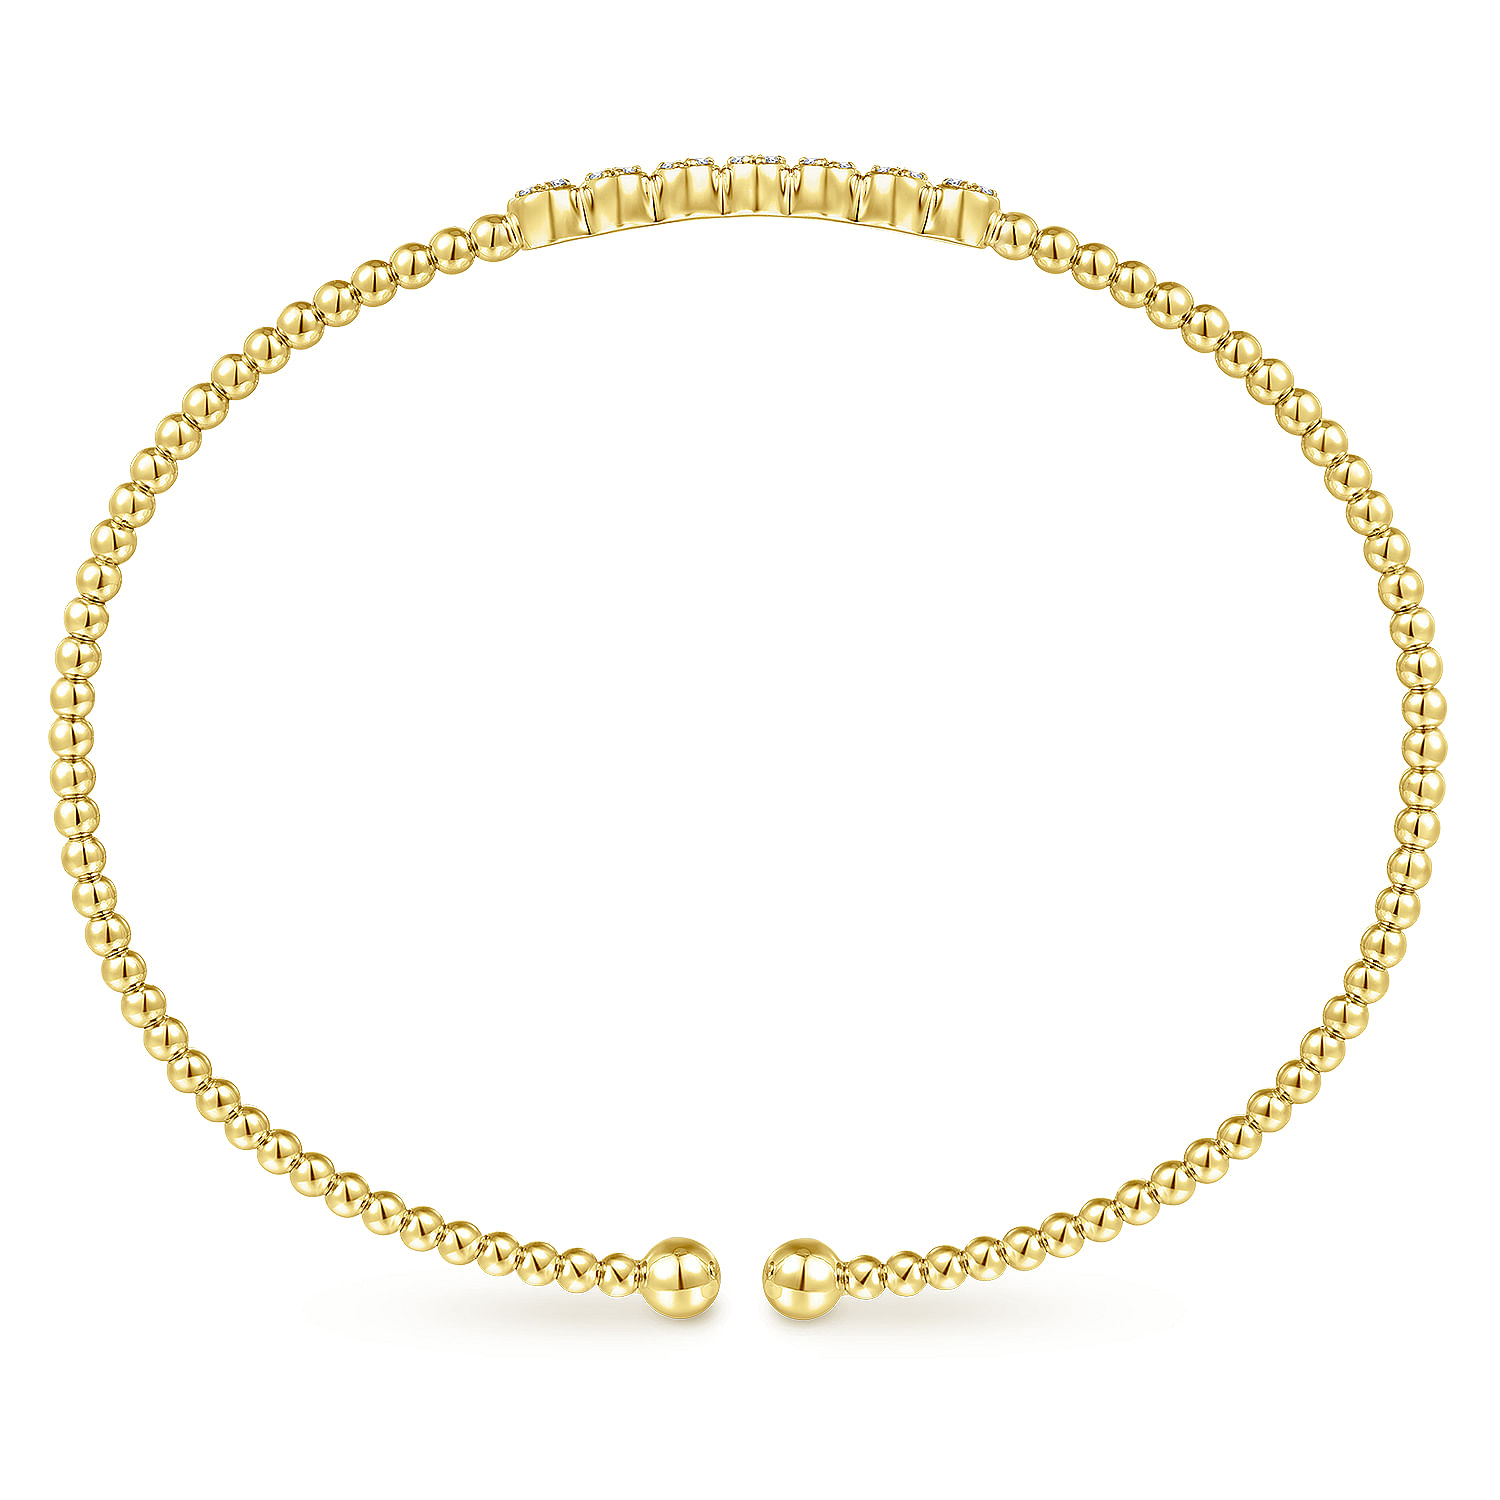 14K Yellow Gold Bujukan Bead Cuff Bracelet with Cluster Diamond Stations - 0.14 ct - Shot 3